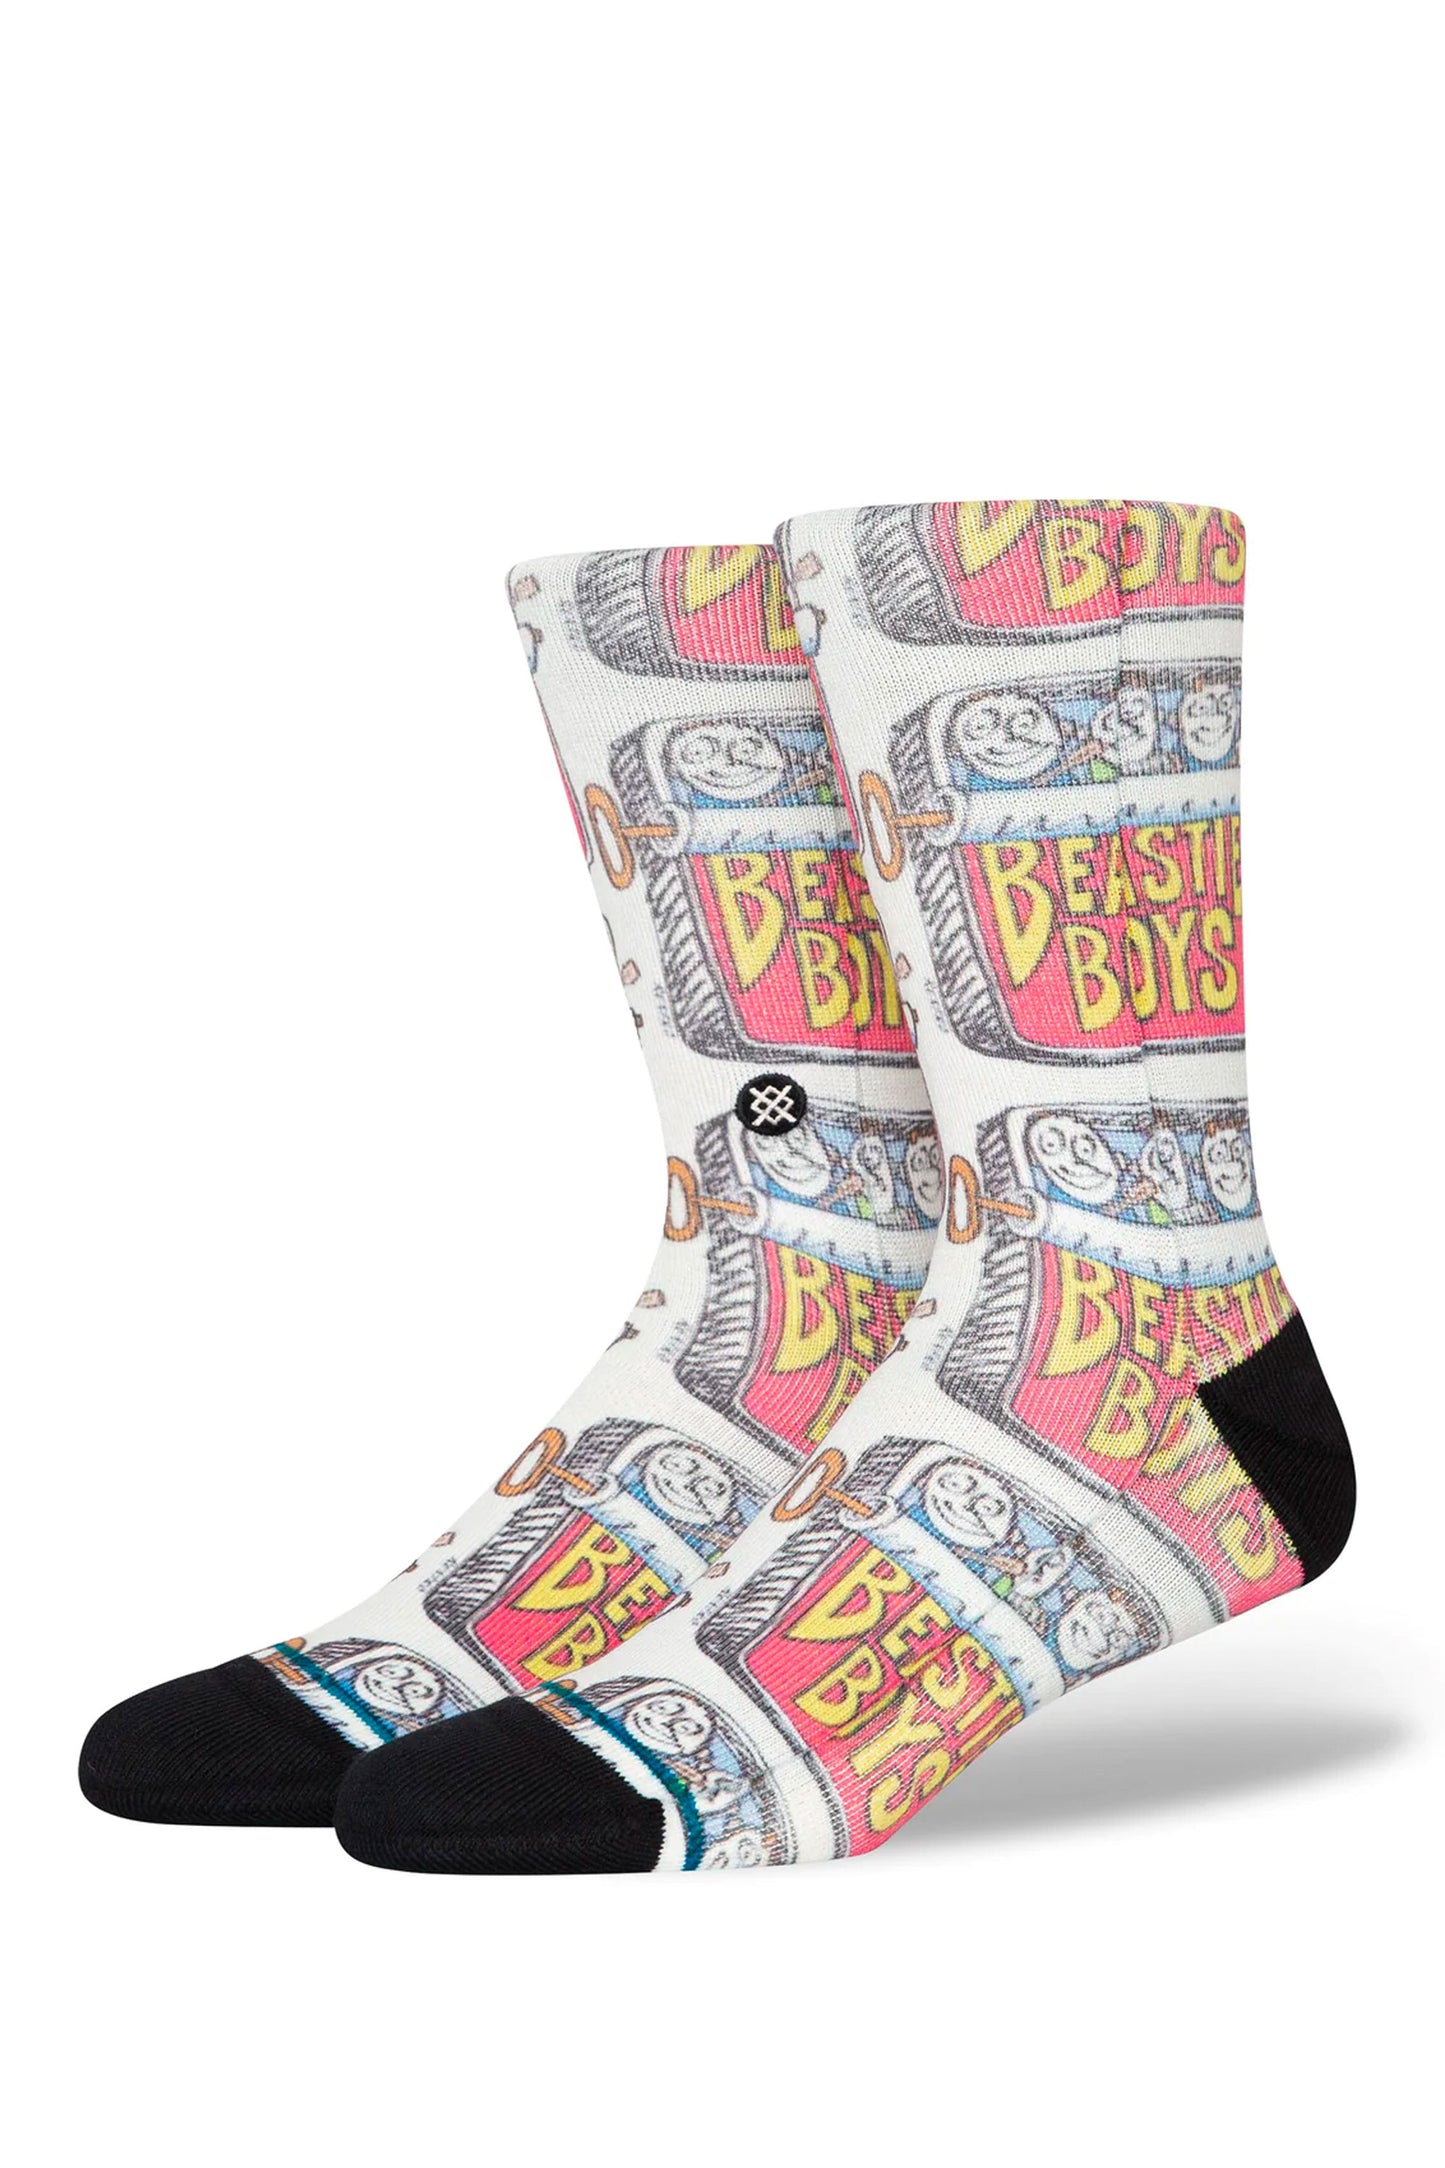 Pukas-Surf-Shop-stance-socks-canned